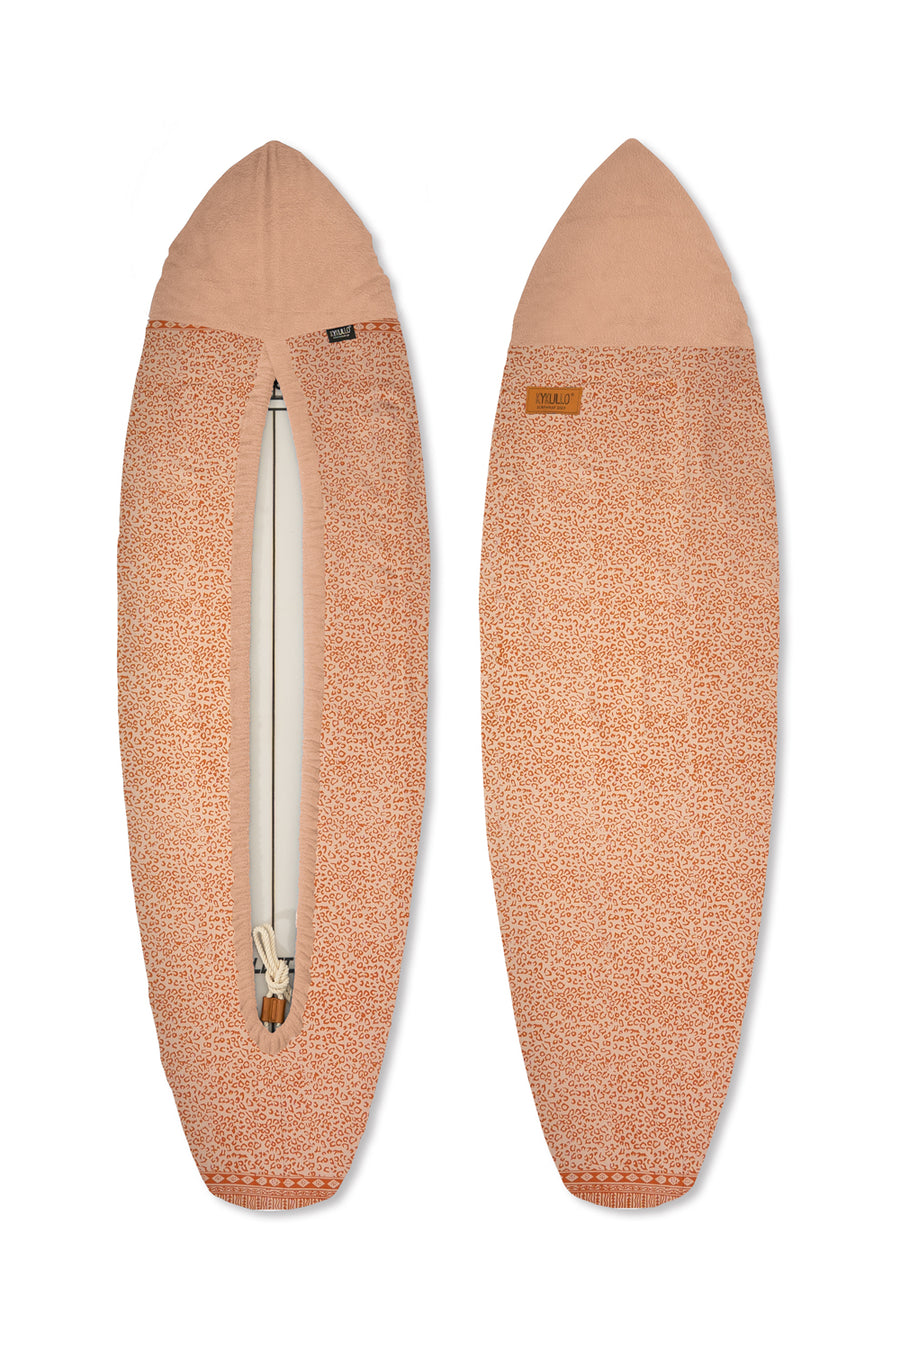 SURFWRAP 6'4 -LIGHT ORANGE